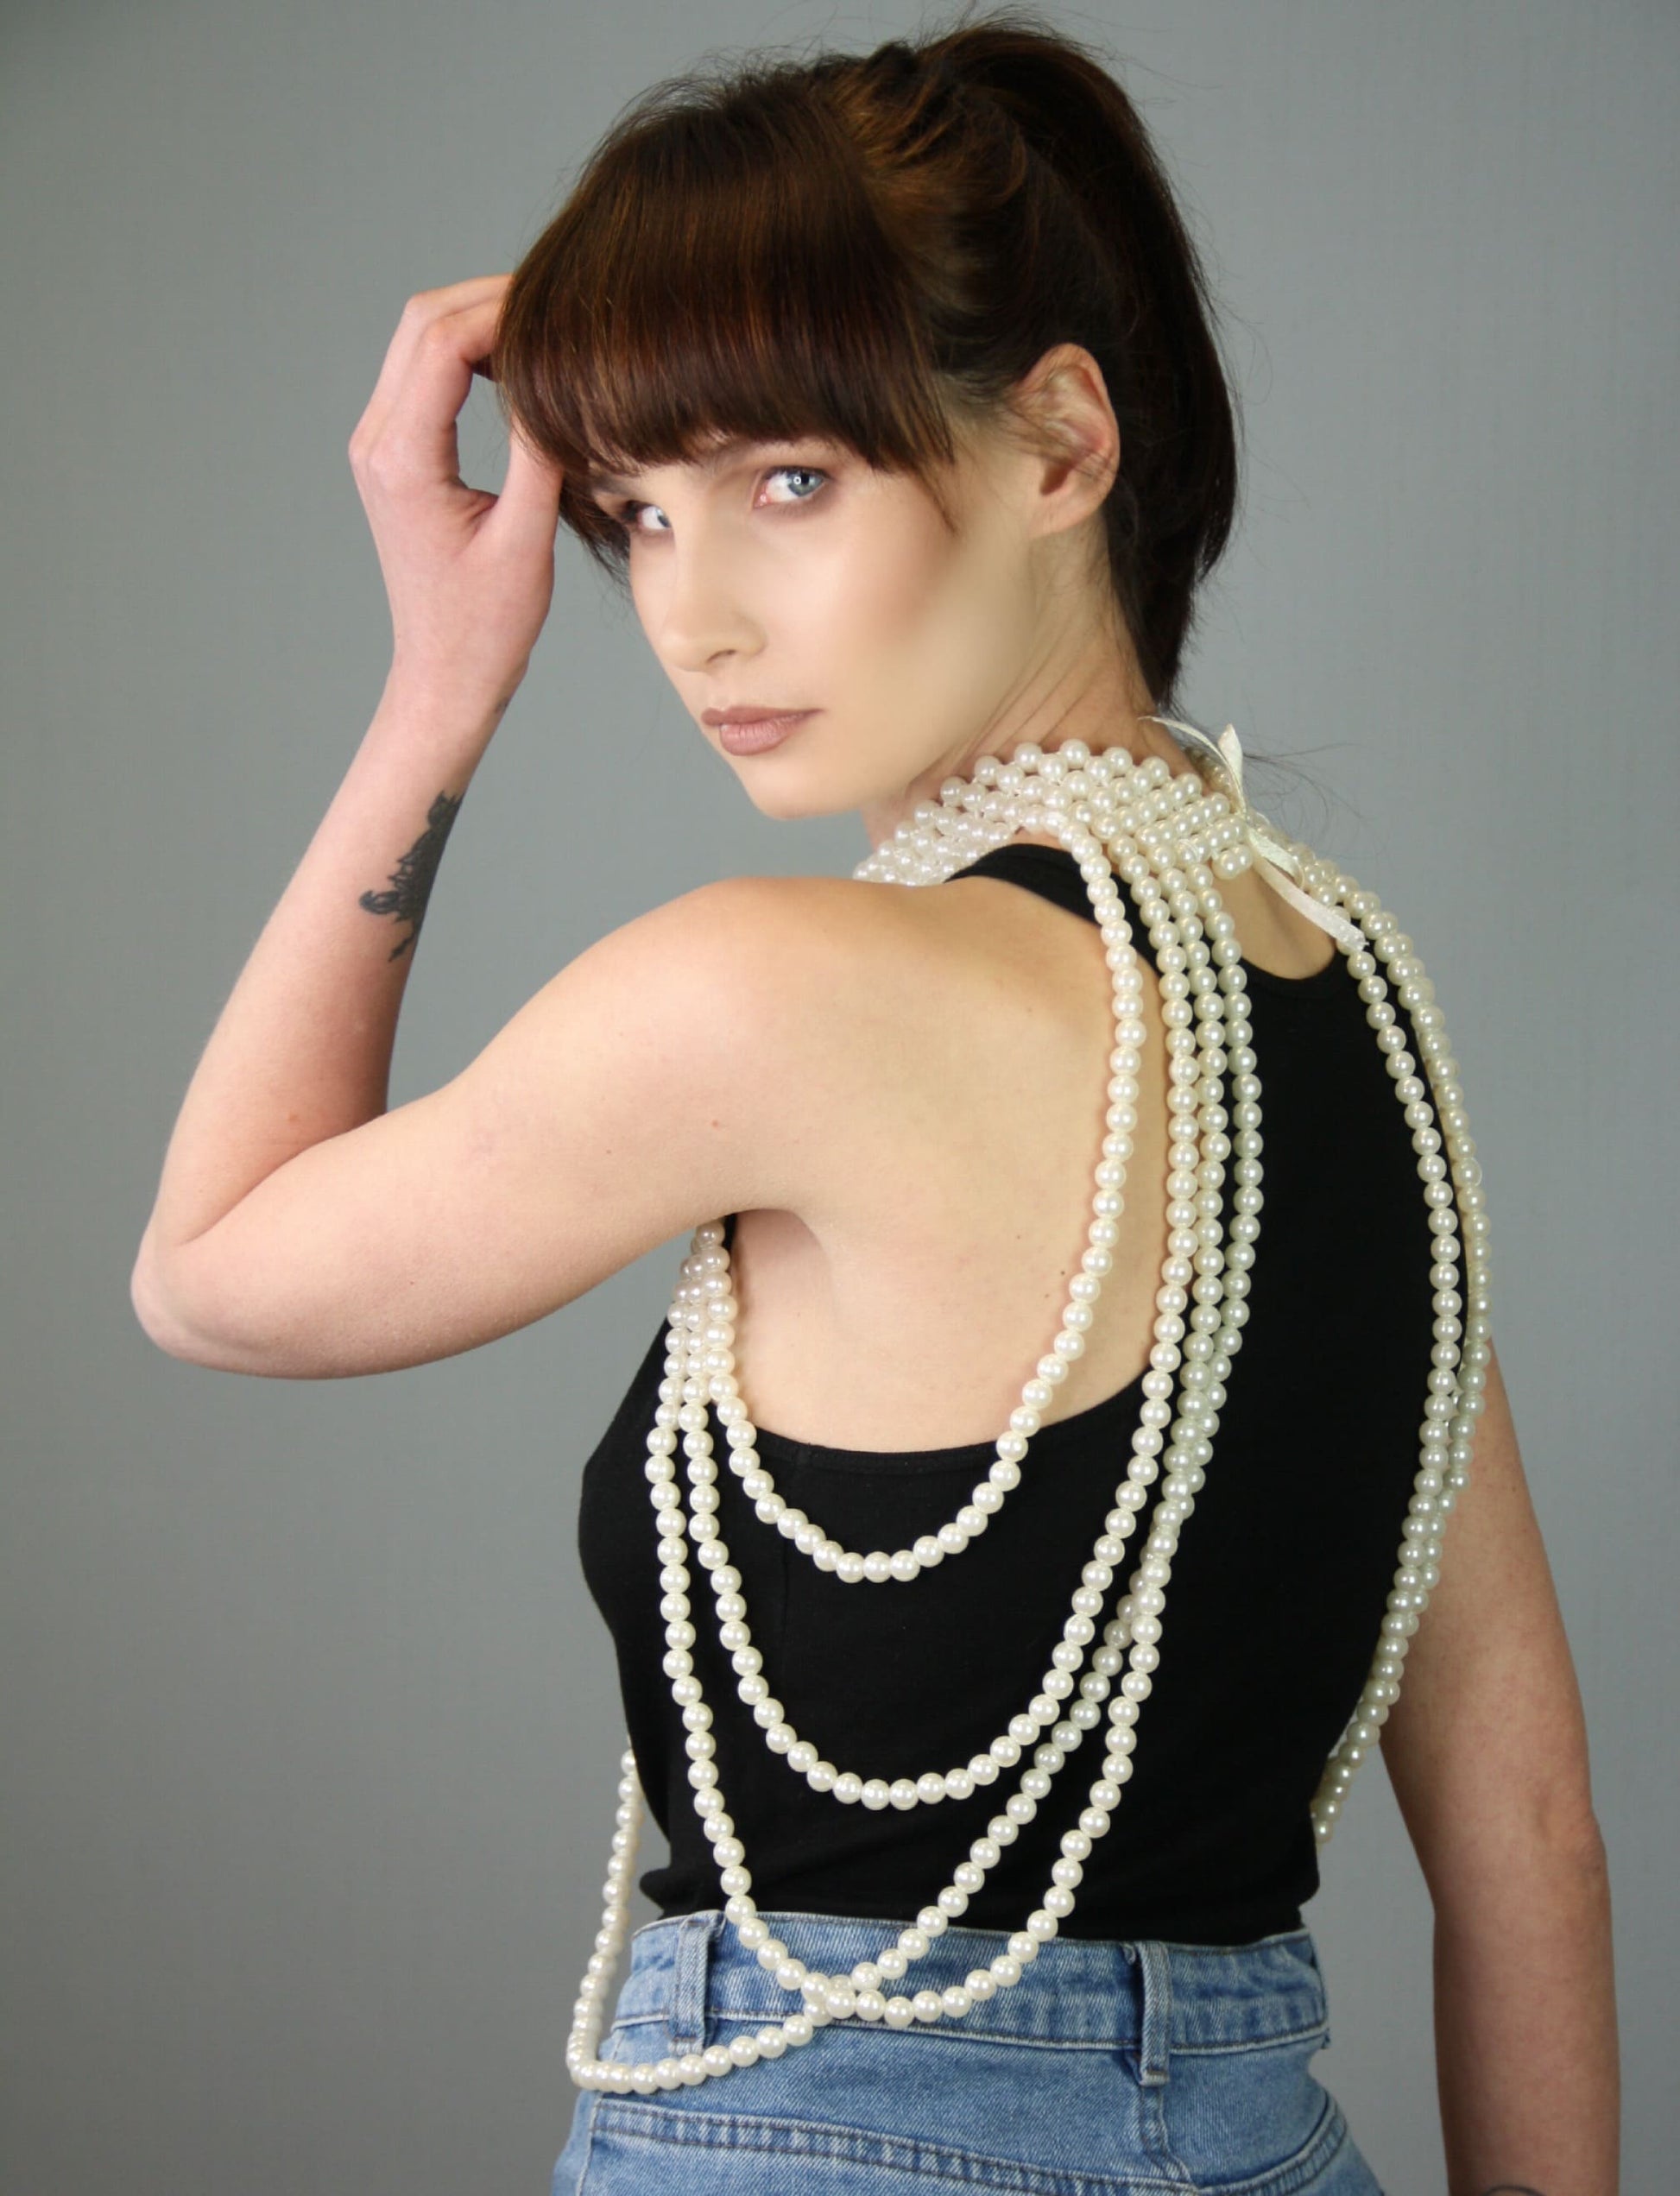 Hellen.V - Designer Body White Pearl Chain | Body jewelry